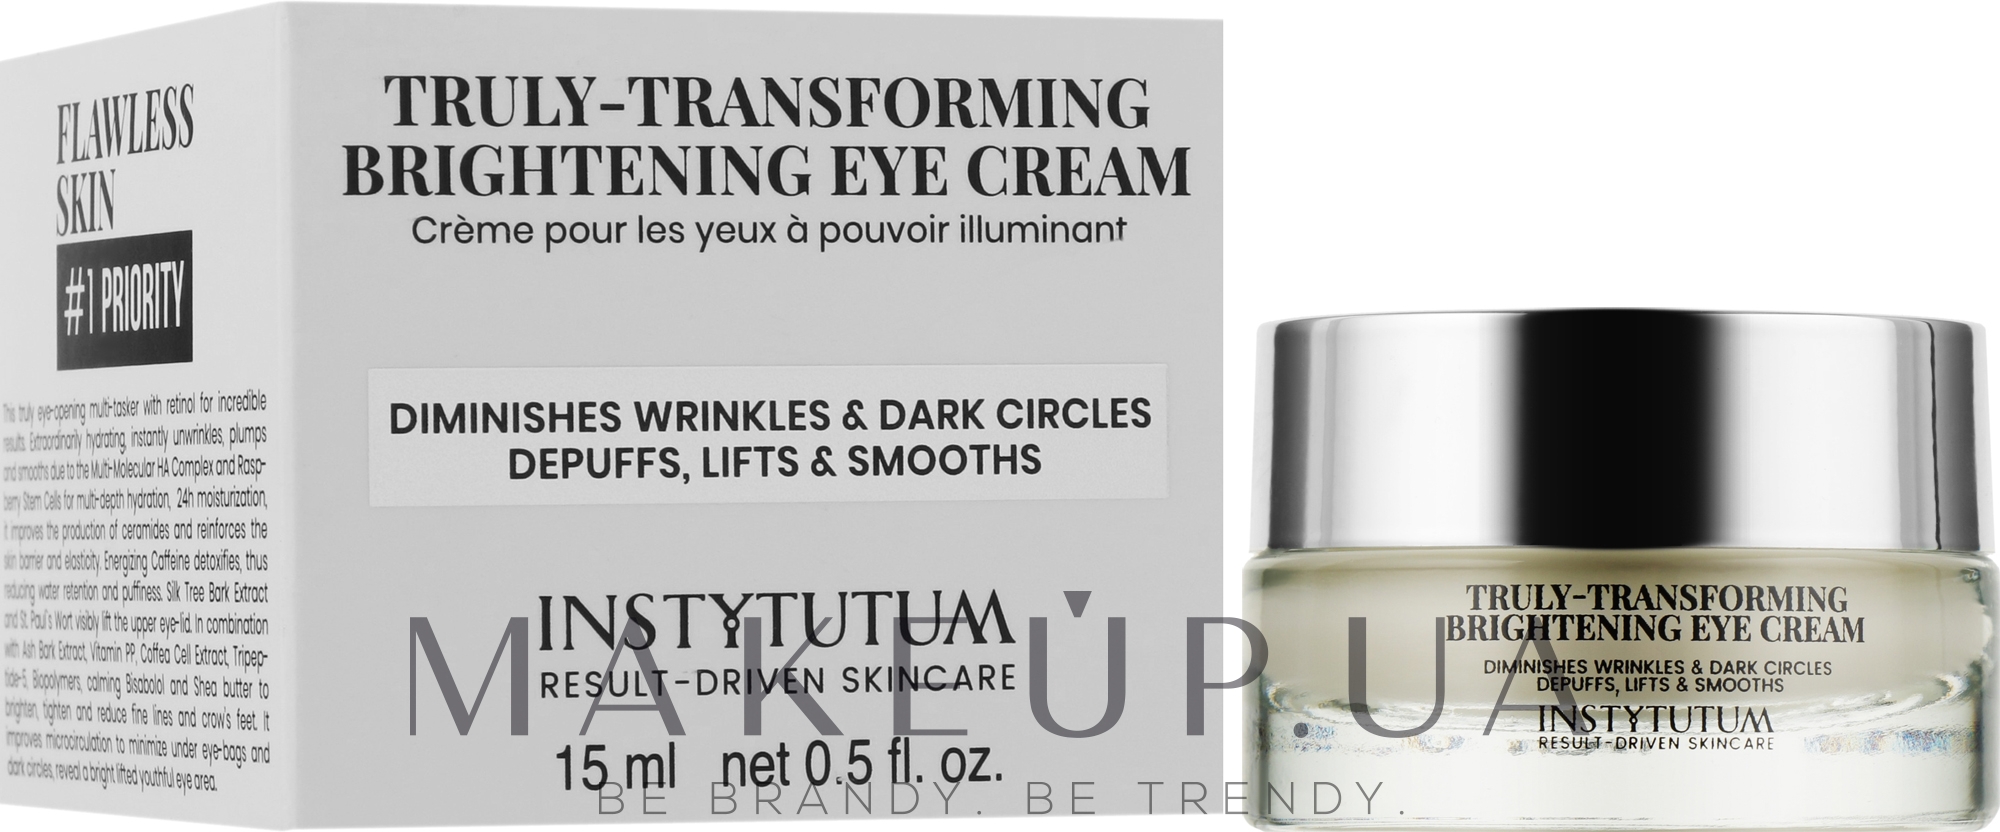 Крем для области вокруг глаз осветляющий - Instytutum Truly-Transforming Brightening Eye Cream  — фото 15ml